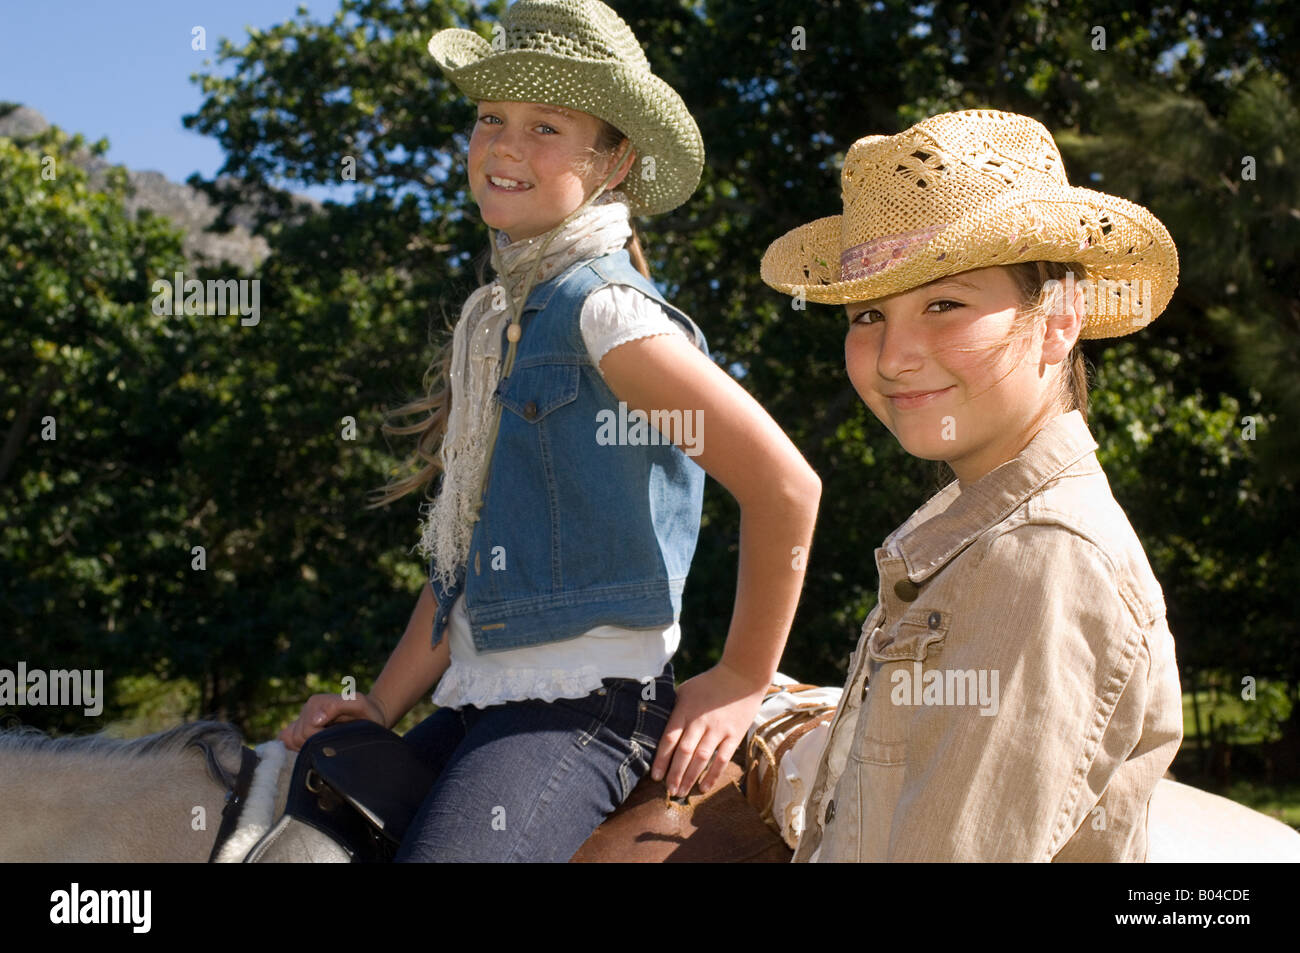 Two girls riding horses Stock Photo